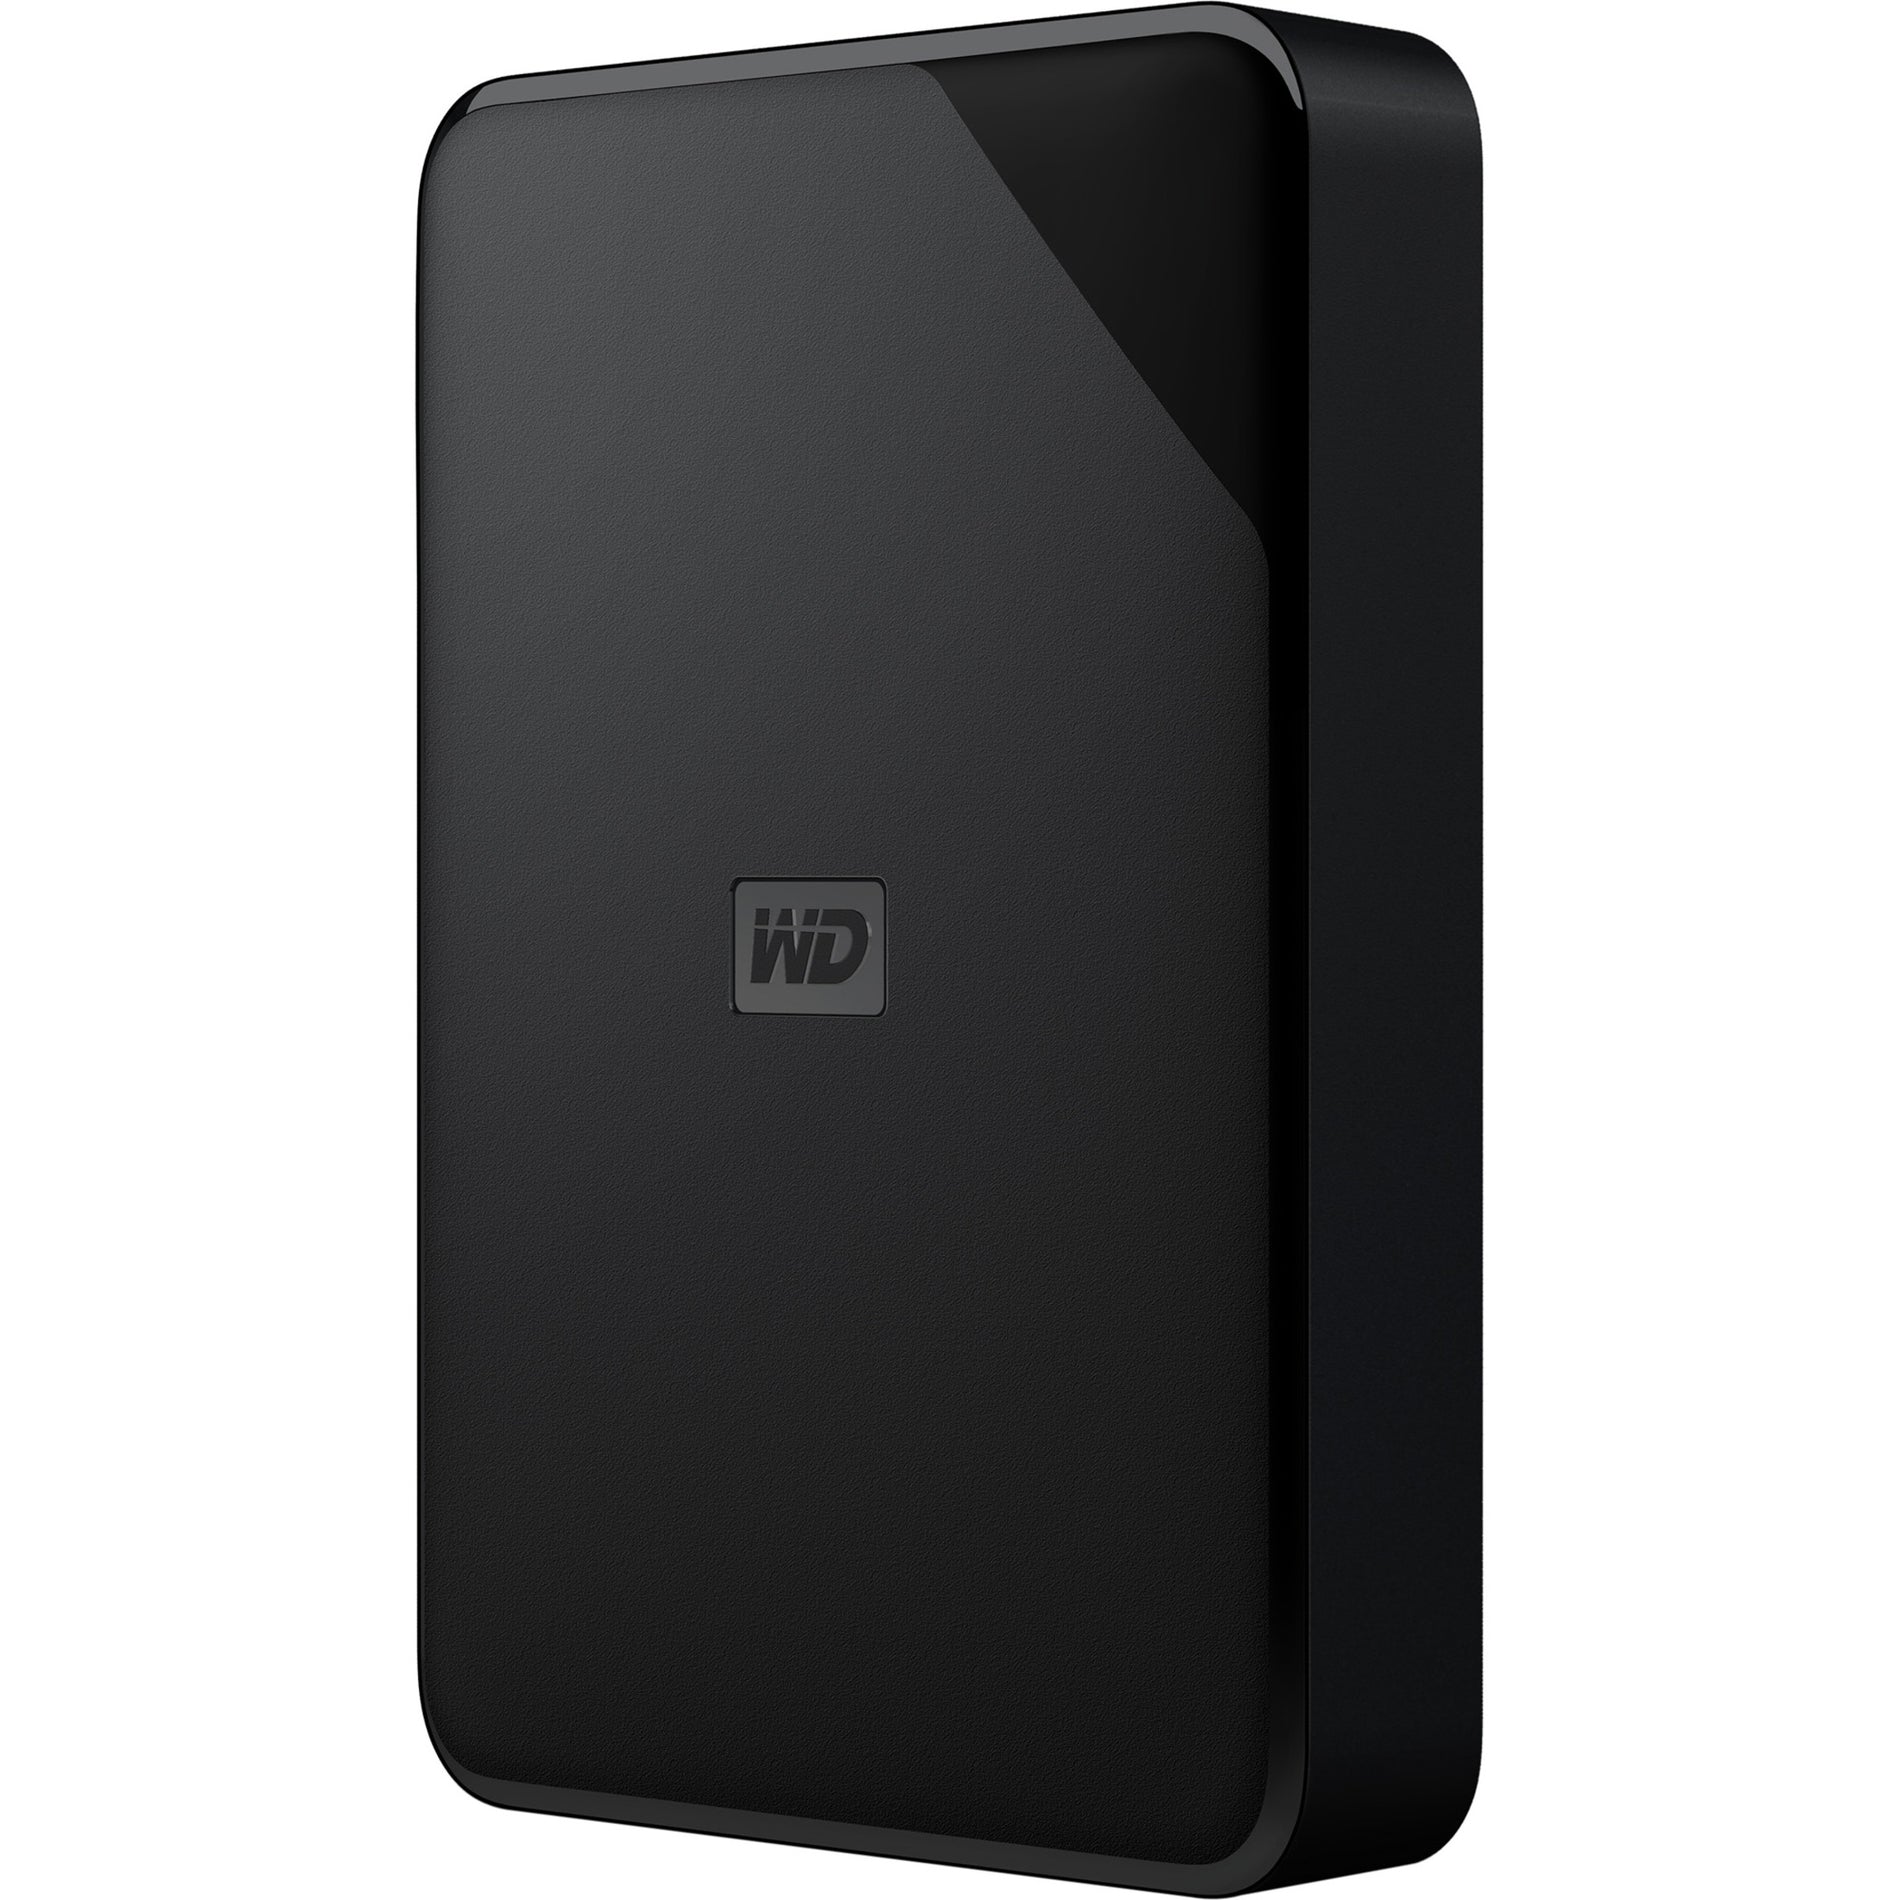 WD WDBEPK0020BBK-WESN Elements SE Portable Storage, 2 TB External Hard Drive, USB 3.0, Black